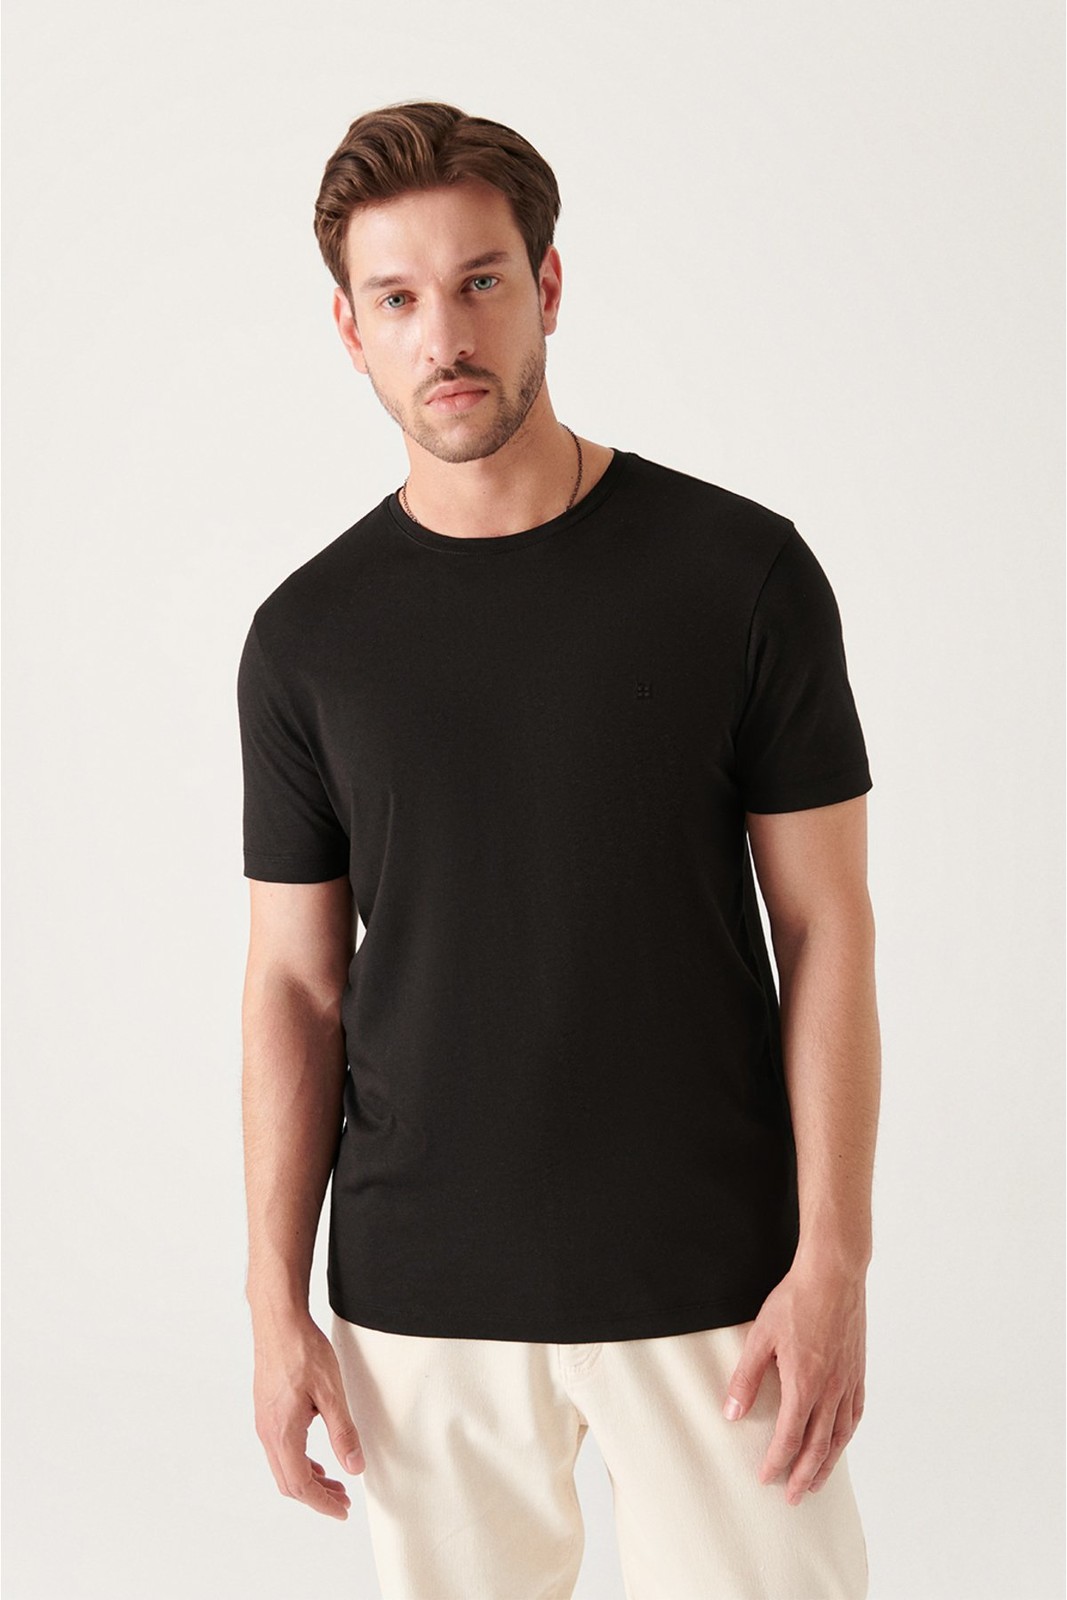 Avva Men's Black Ultrasoft Crew Neck Cotton Slim Fit Narrow Cut T-shirt